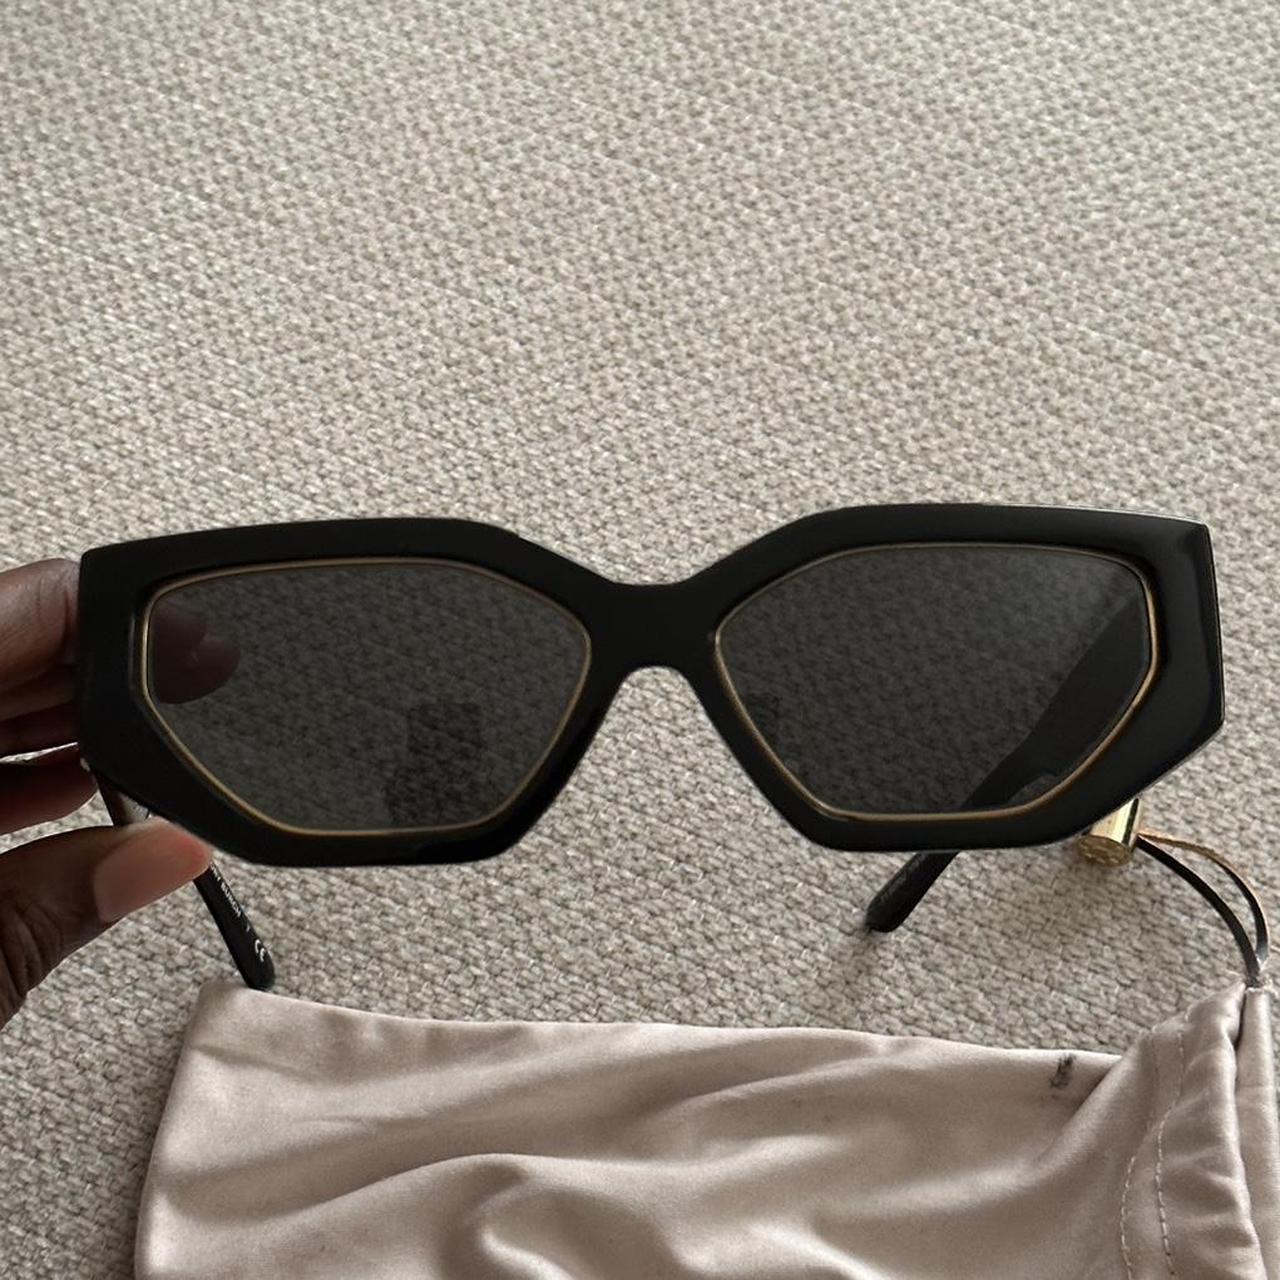 Tory Burch Women's Sunglasses - Black